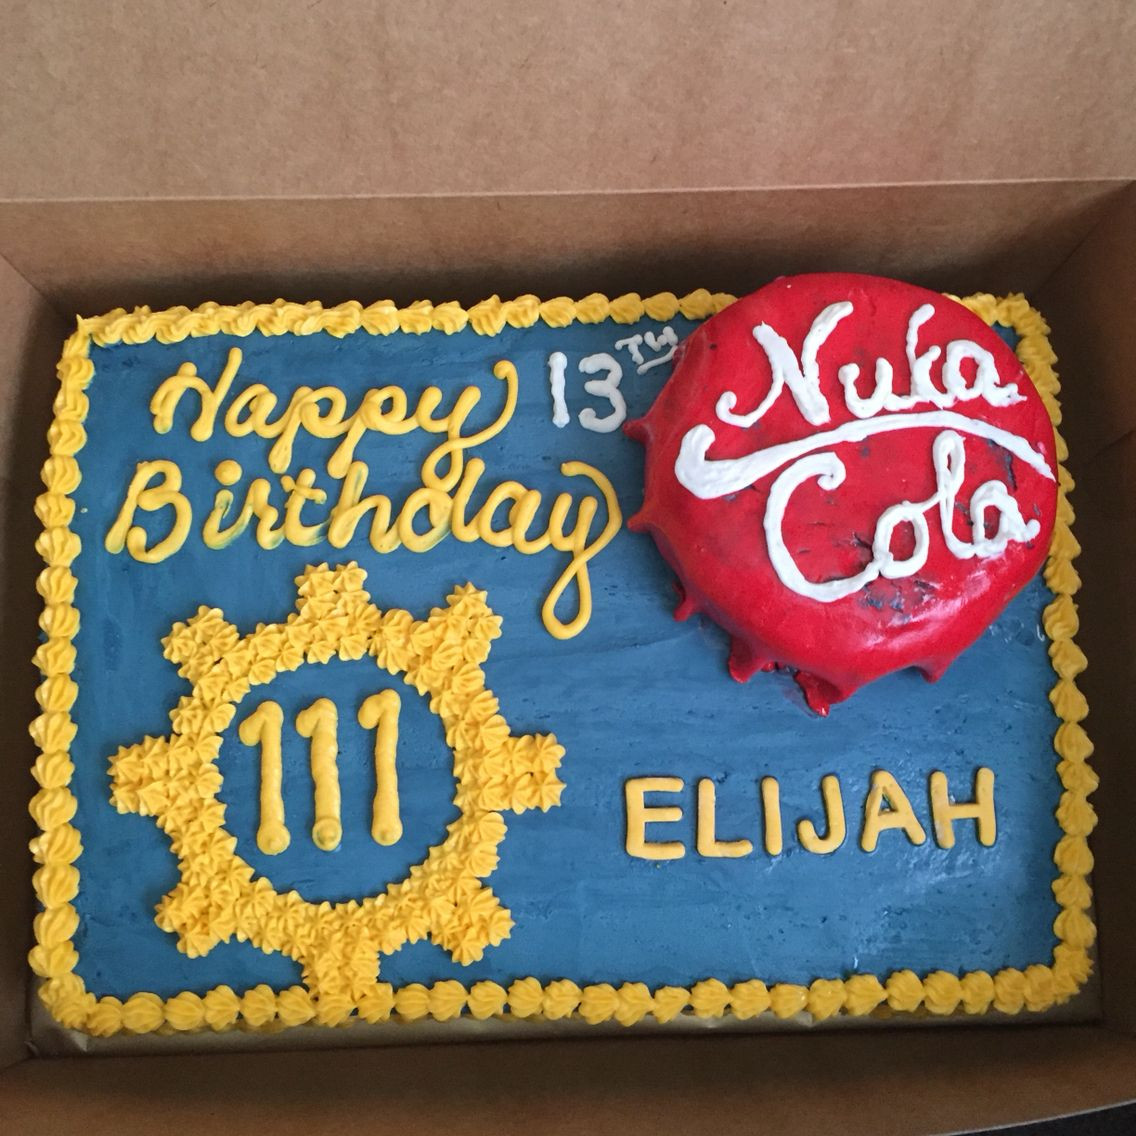 Fallout Birthday Cake
 Fallout cake